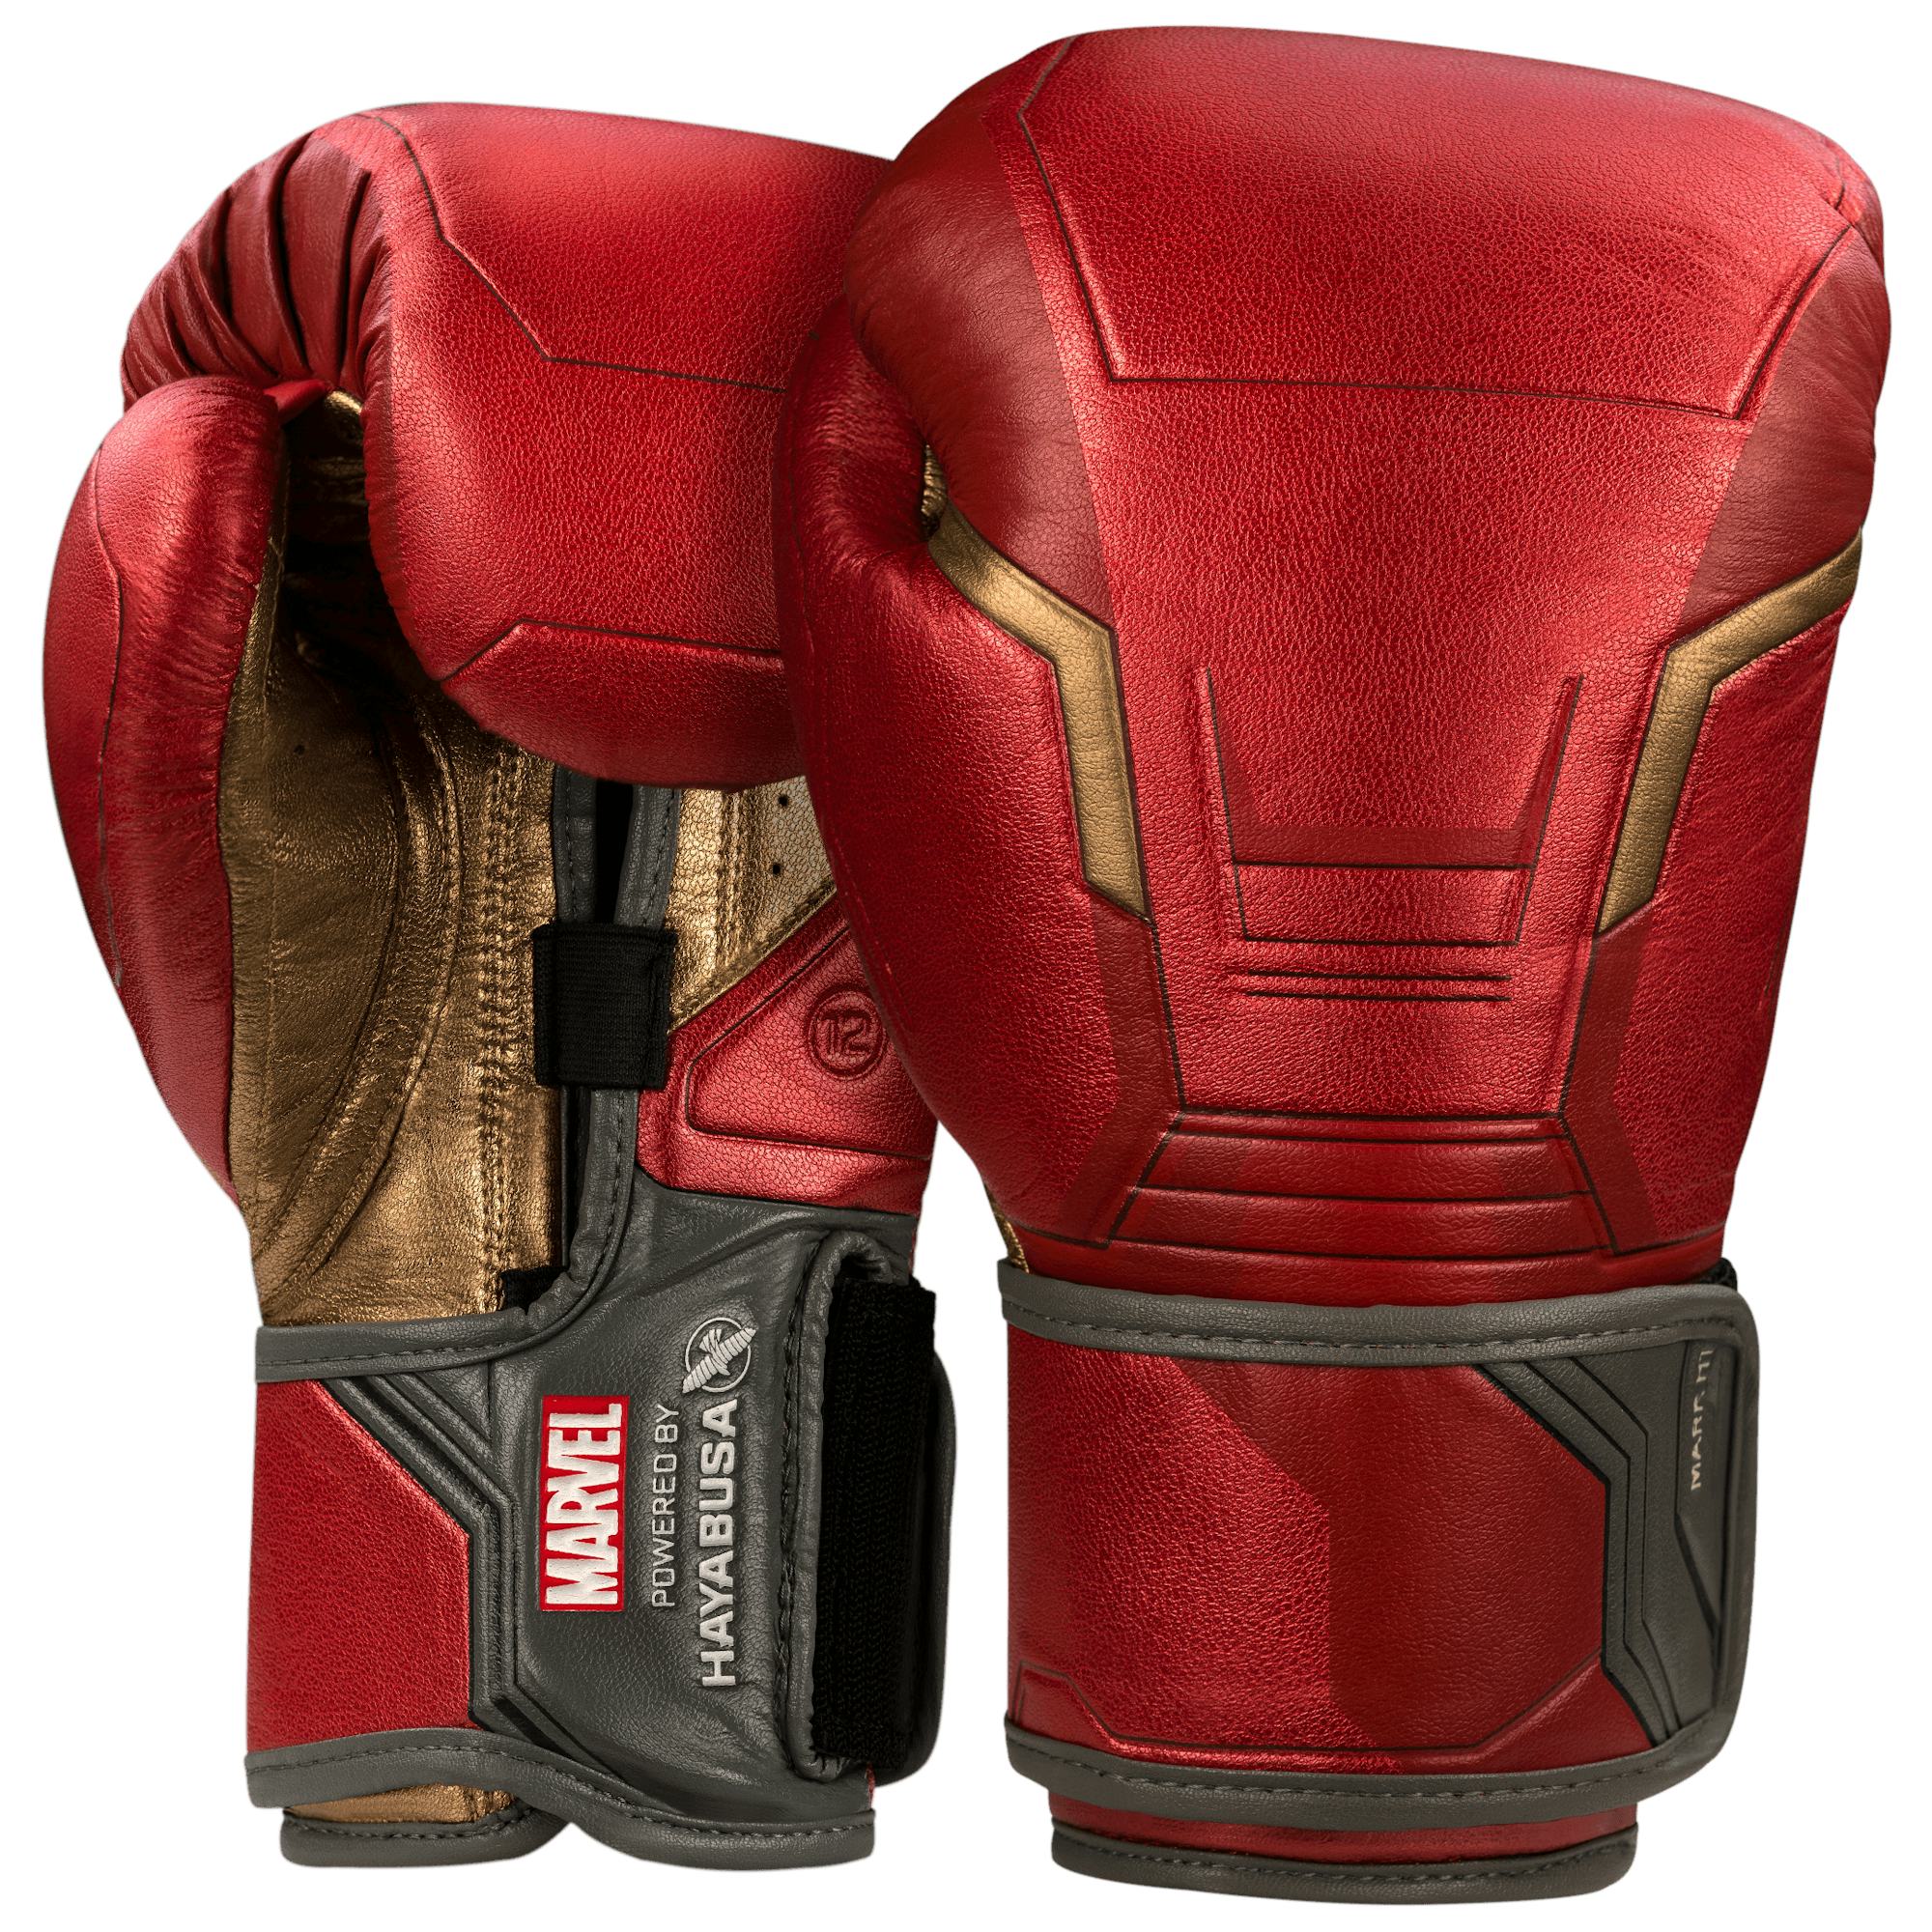 Marvel Hero Elite Iron Man Boxing Gloves by Hayabusa